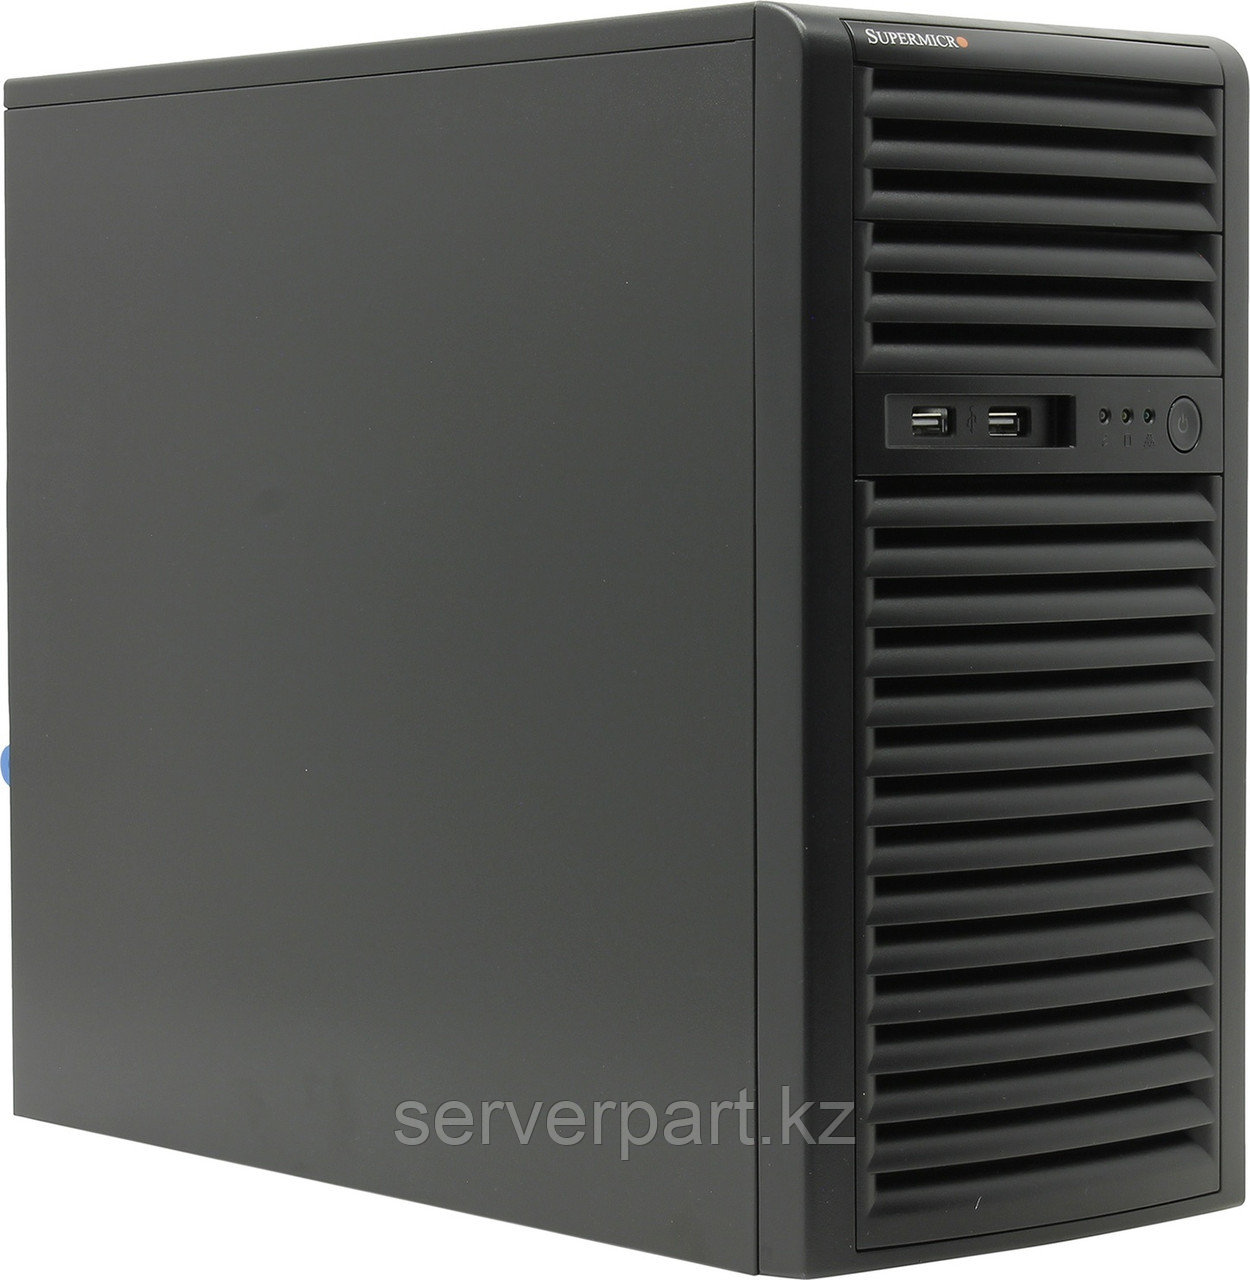 Сервер Supermicro 732-500B\X11SSL-F Tower 4LFF/4-core intel xeon E3-1220v6 3GHz/no RAM/no HDD nhp/RAID